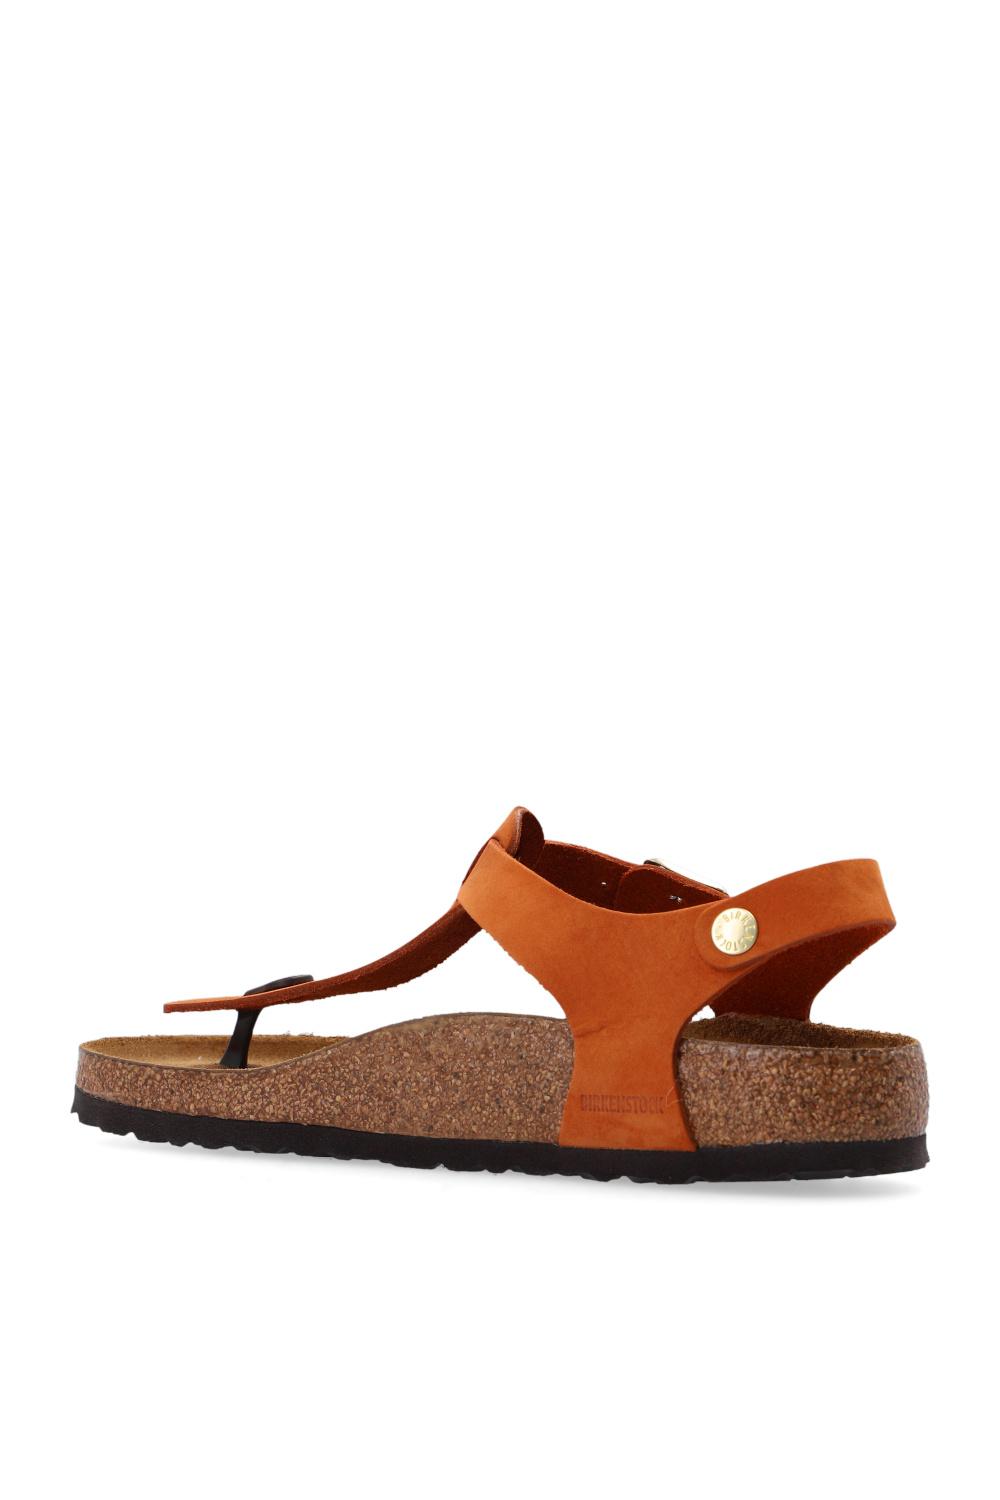 Birkenstock Leather 'kairo' Sandals in Orange | Lyst